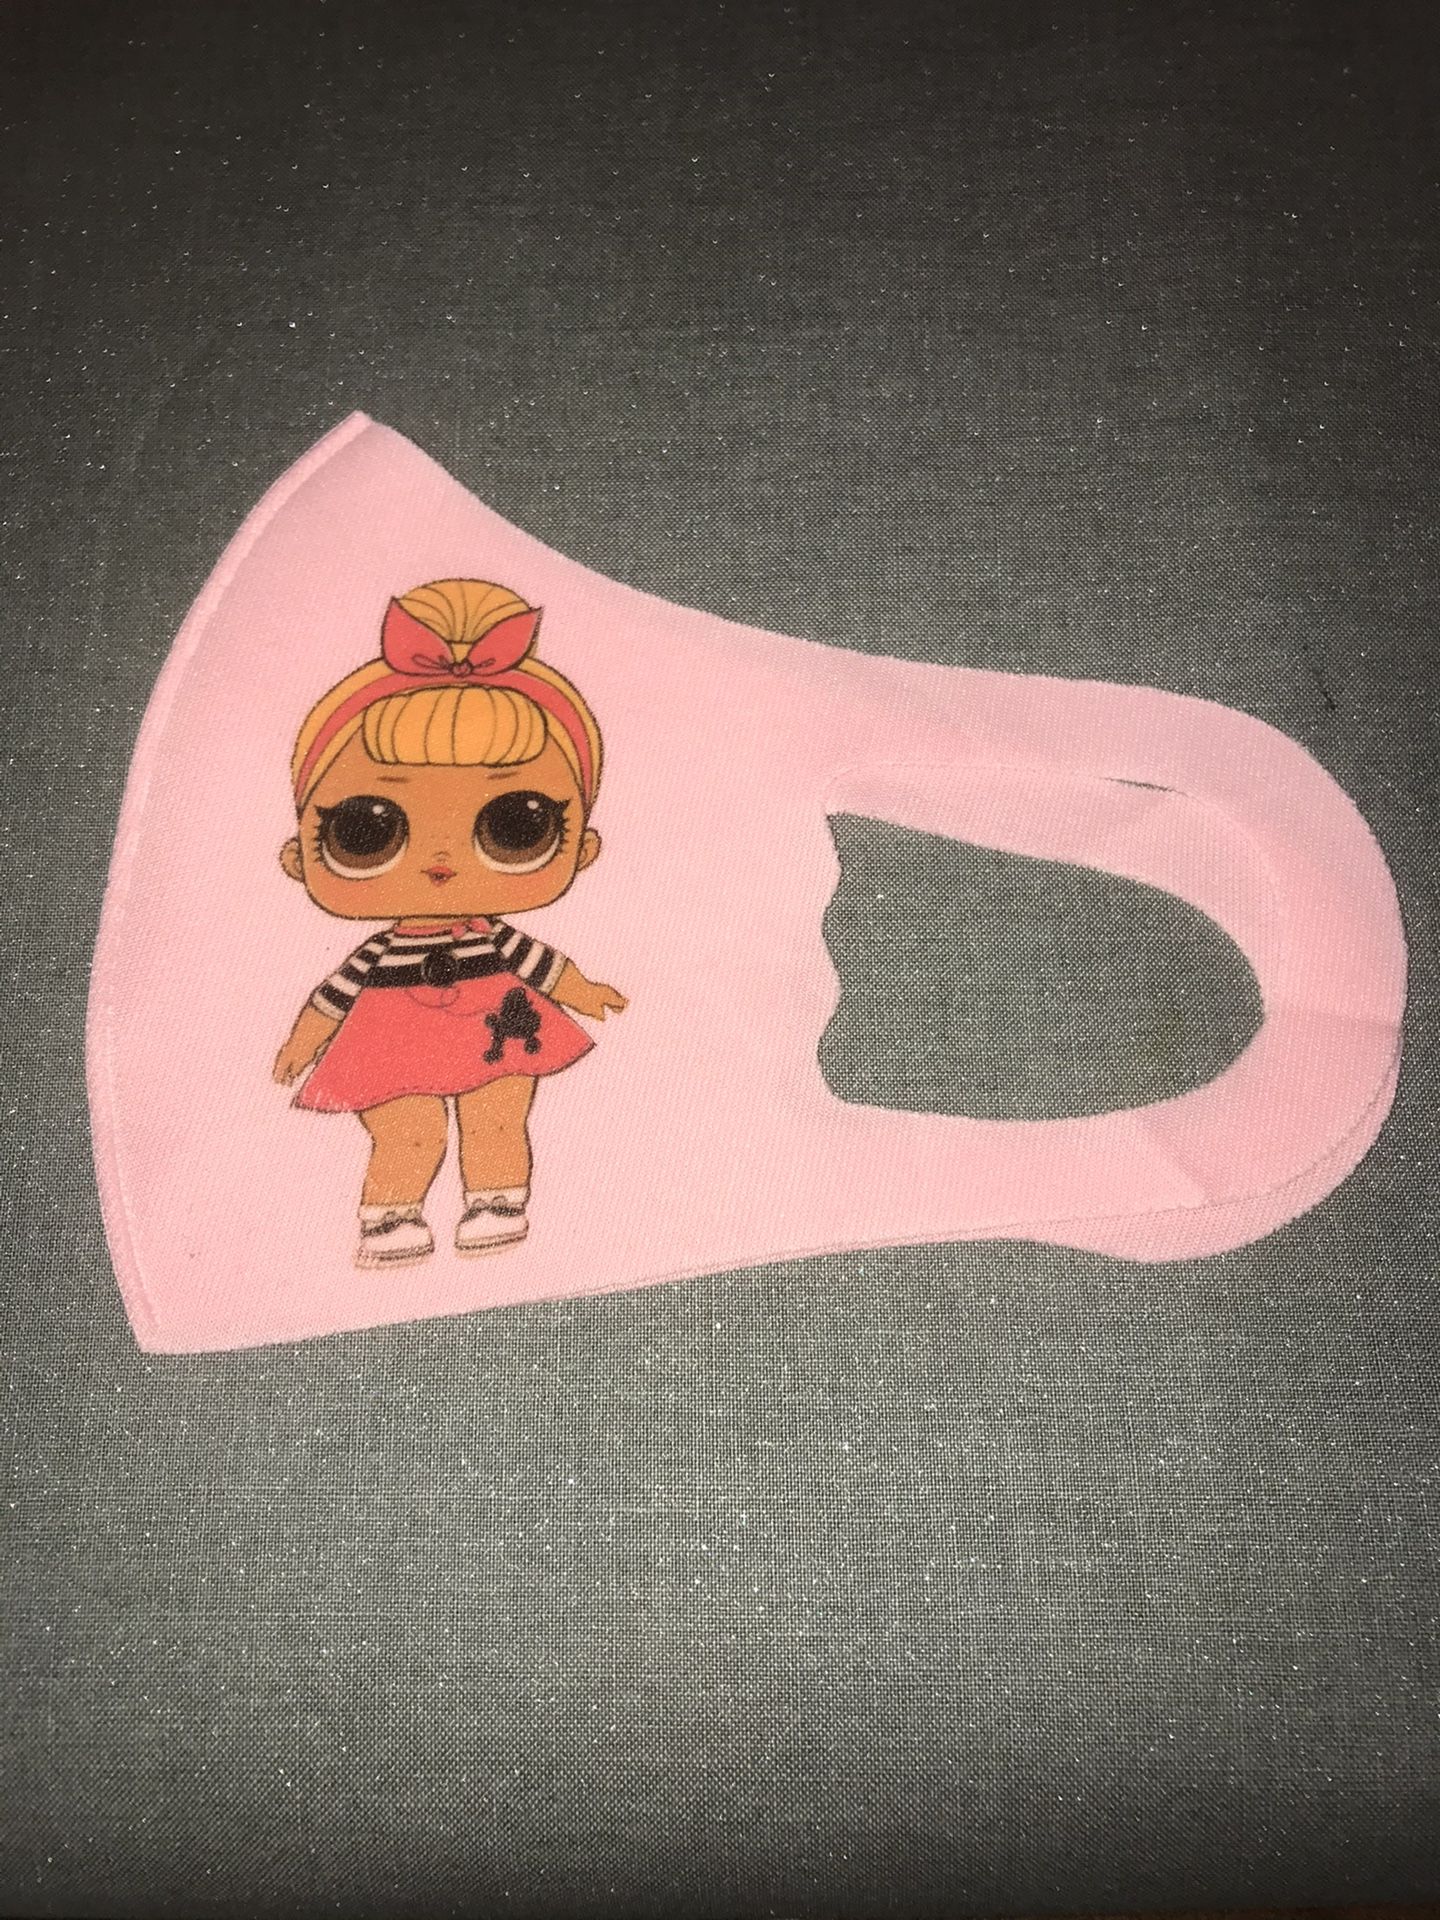 Brand new Lol surprise kid masks $7 each